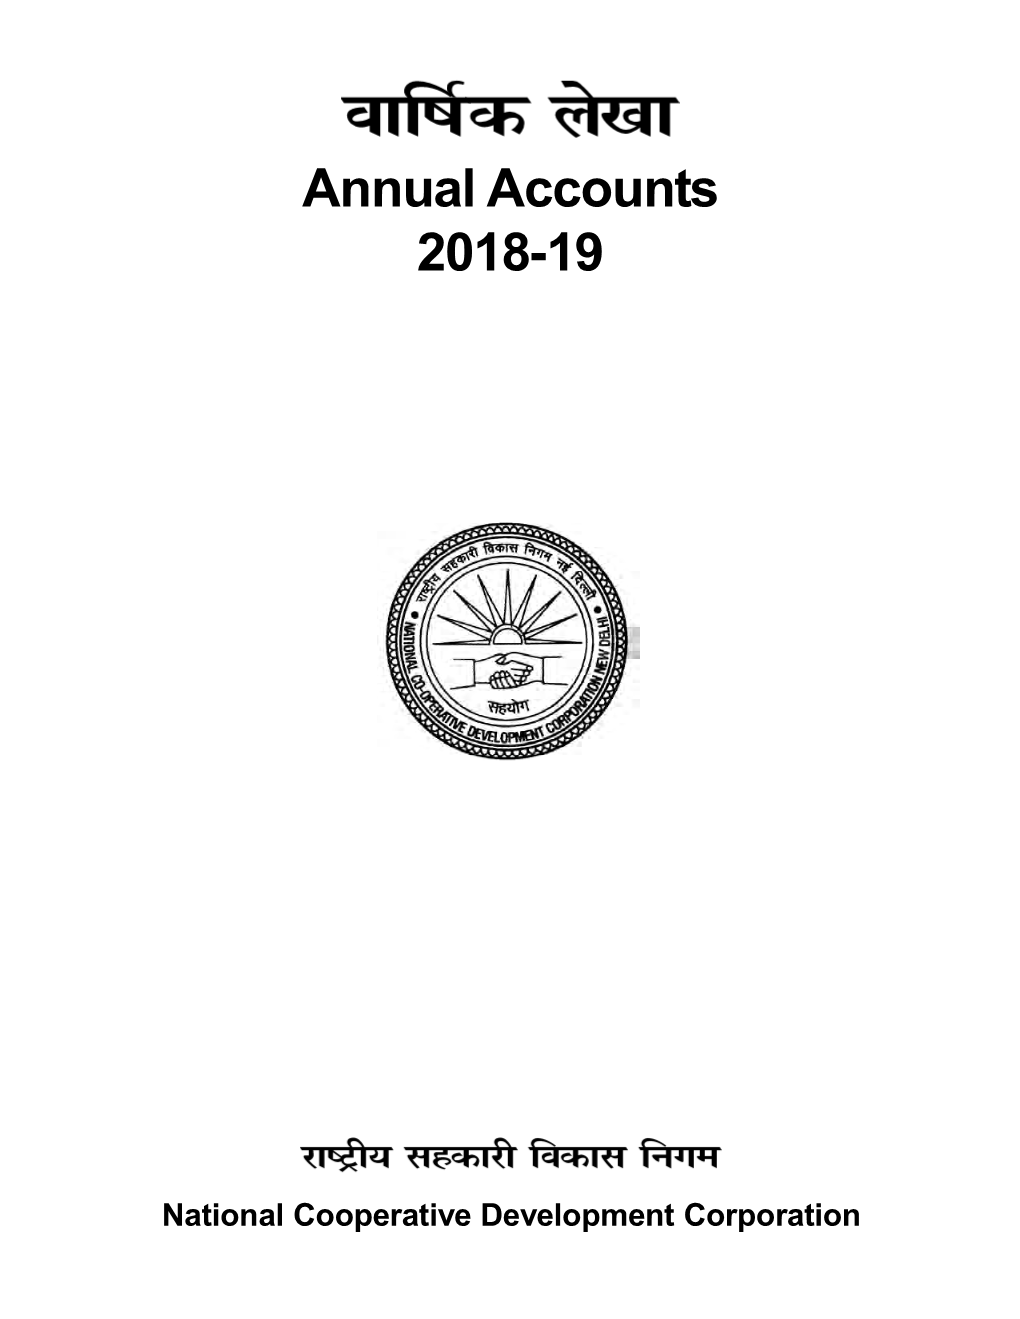 Annual Accounts 2018-19